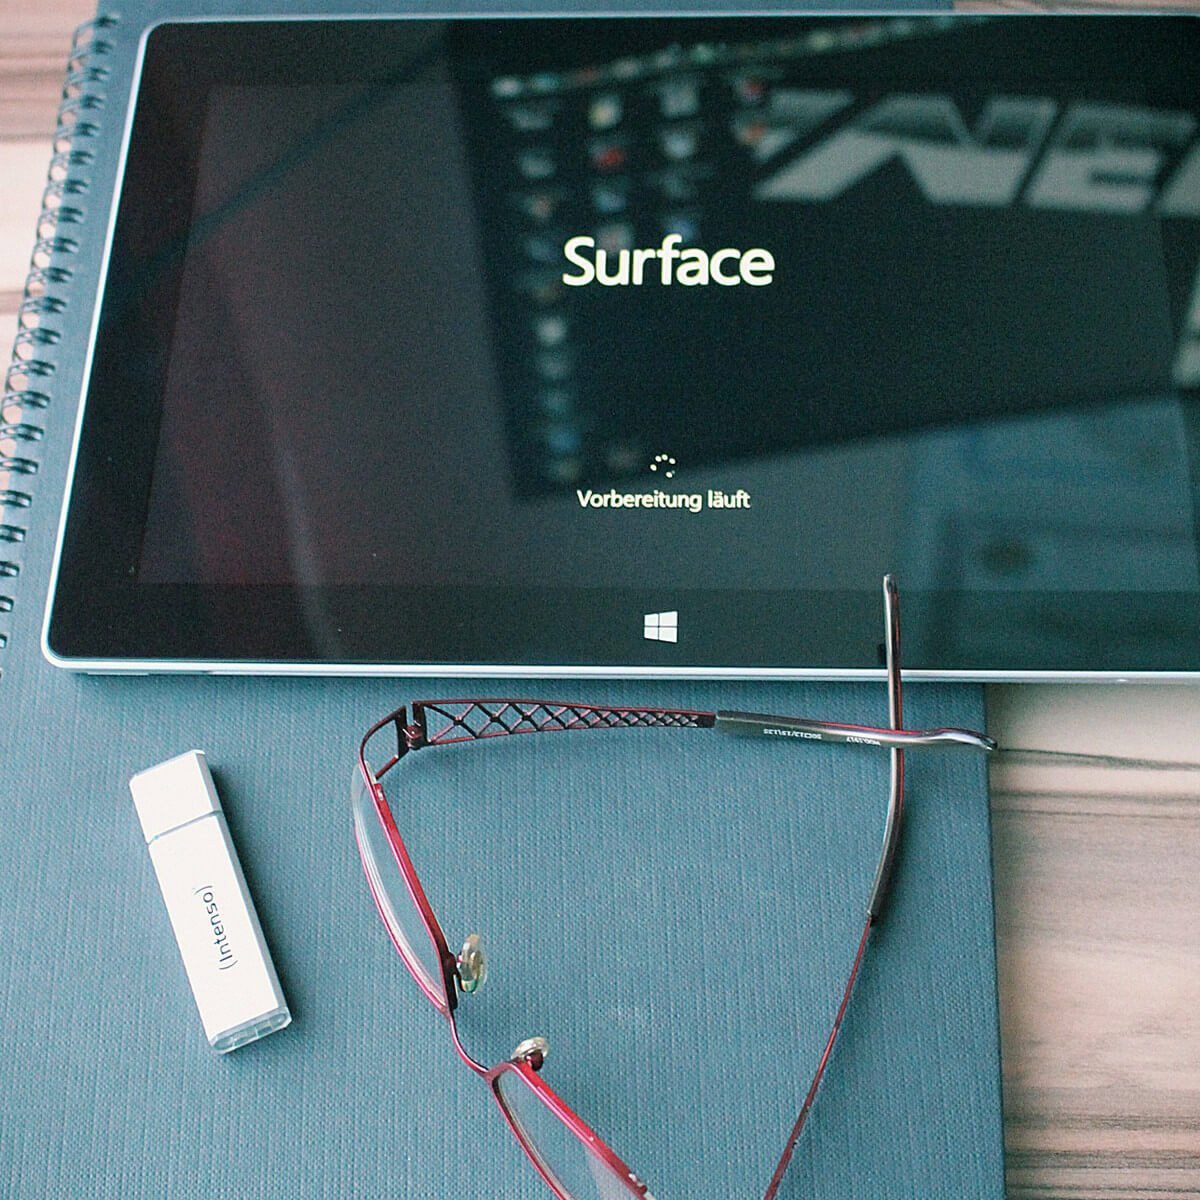 Download Windows 10 Surface app updates